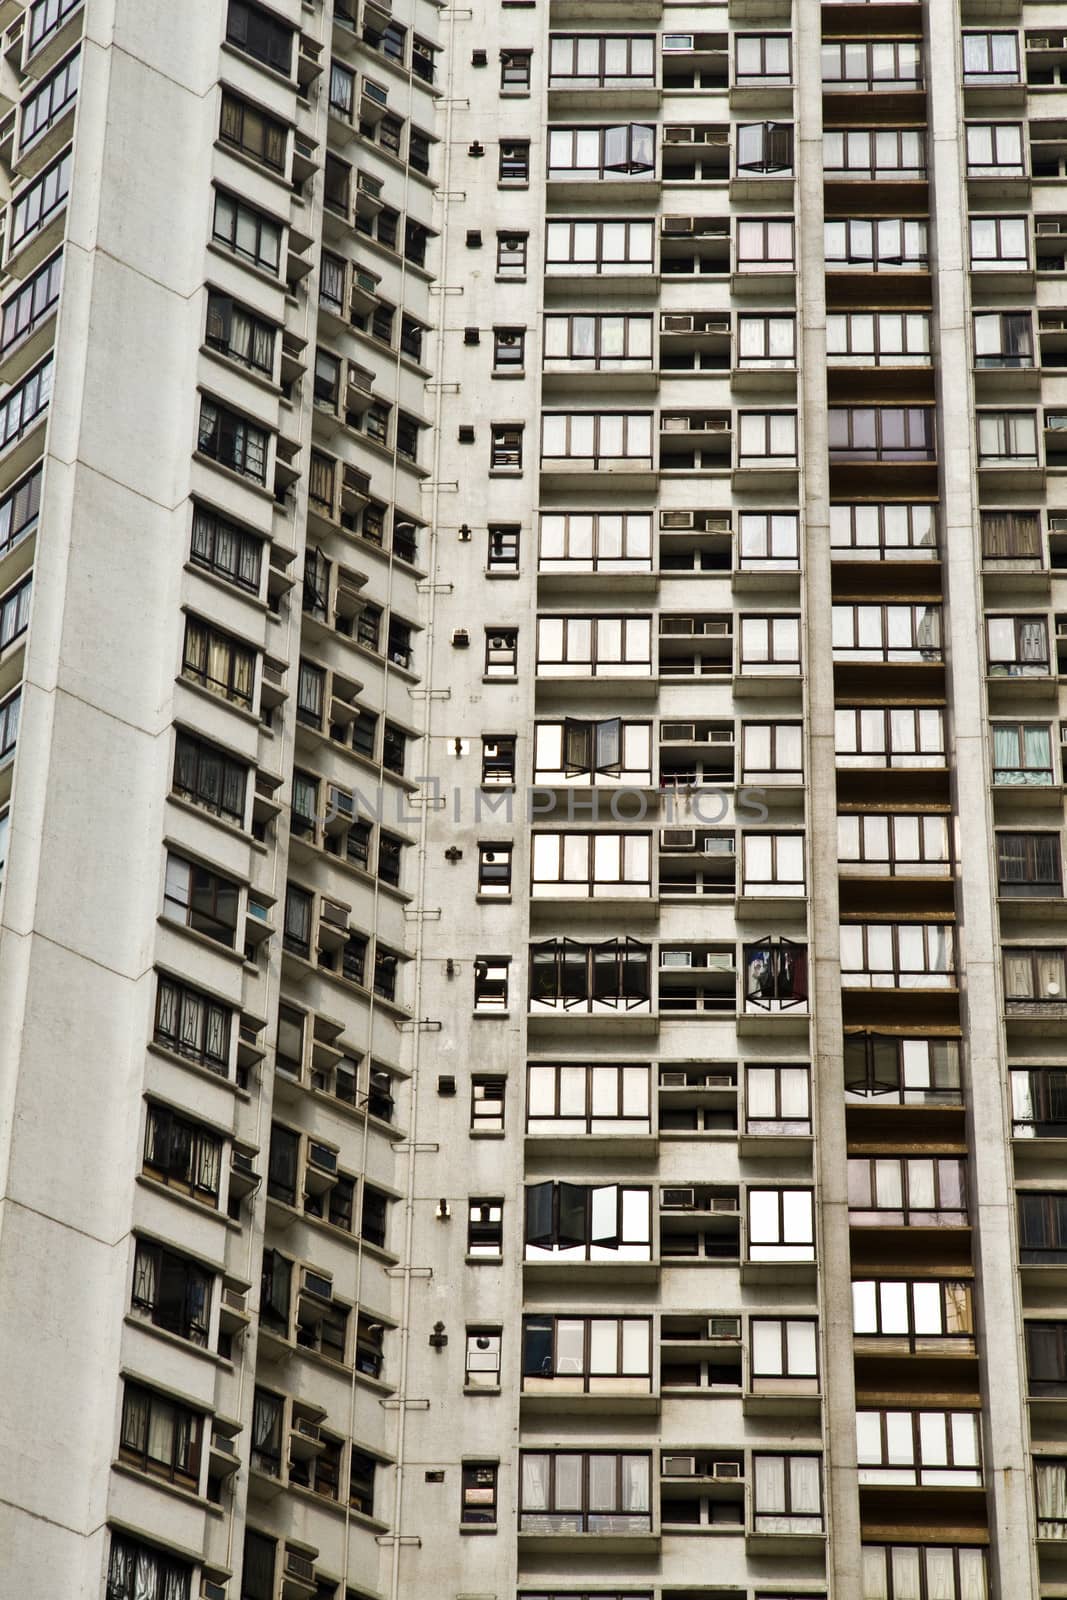 Tall building of apartments in Hong Kong 